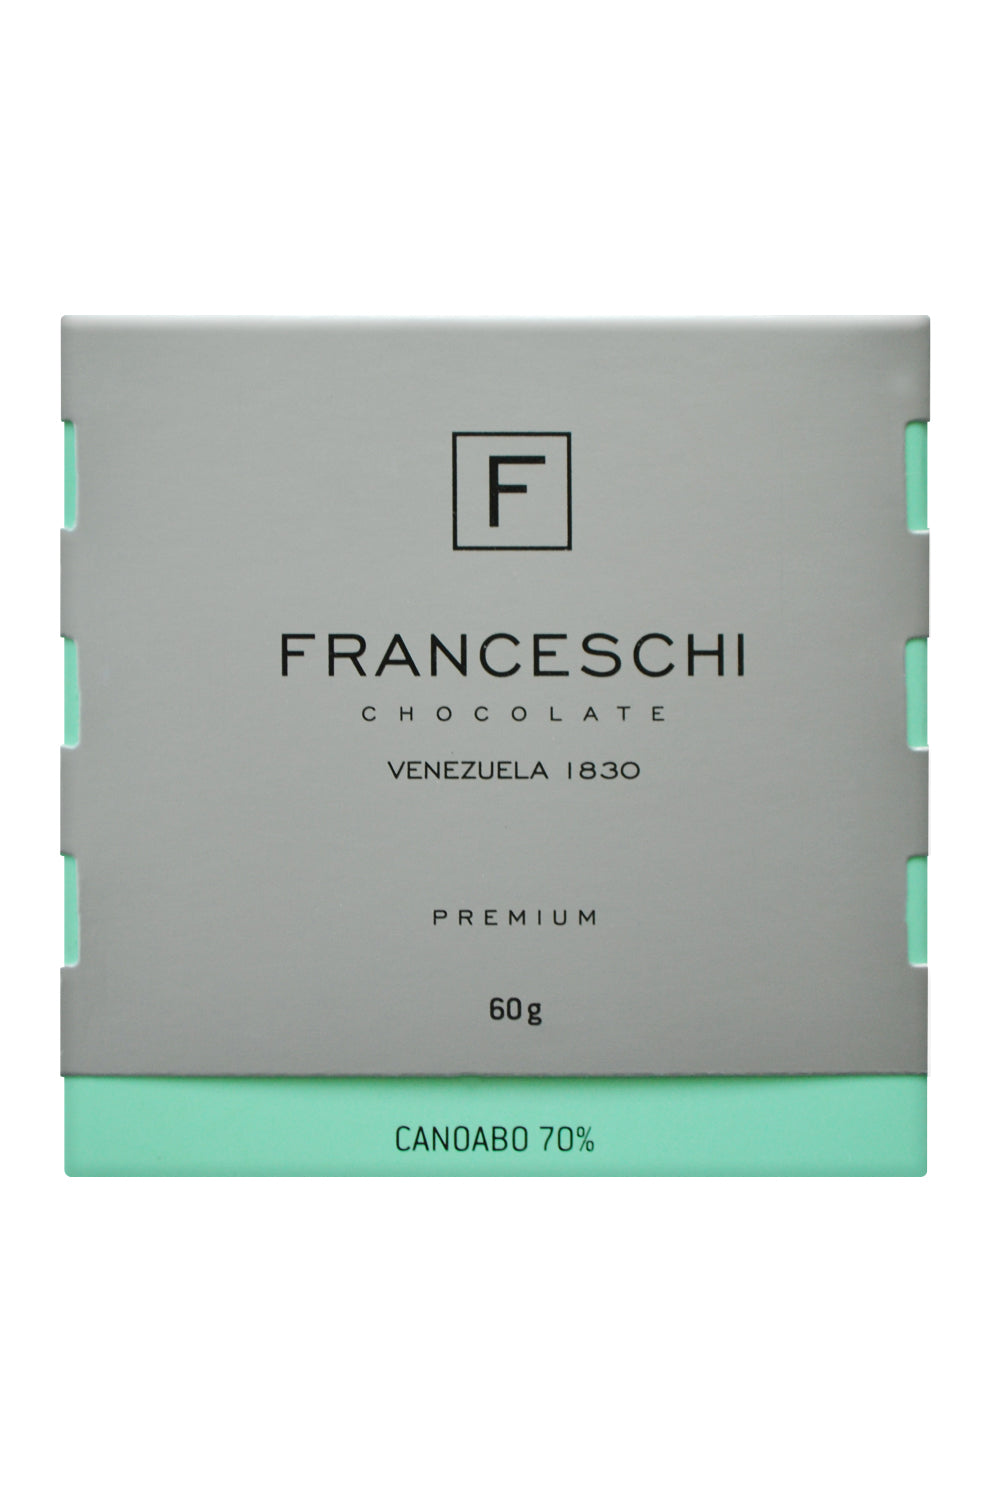 Franceschi Dark Chocolate - Premium Canoabo